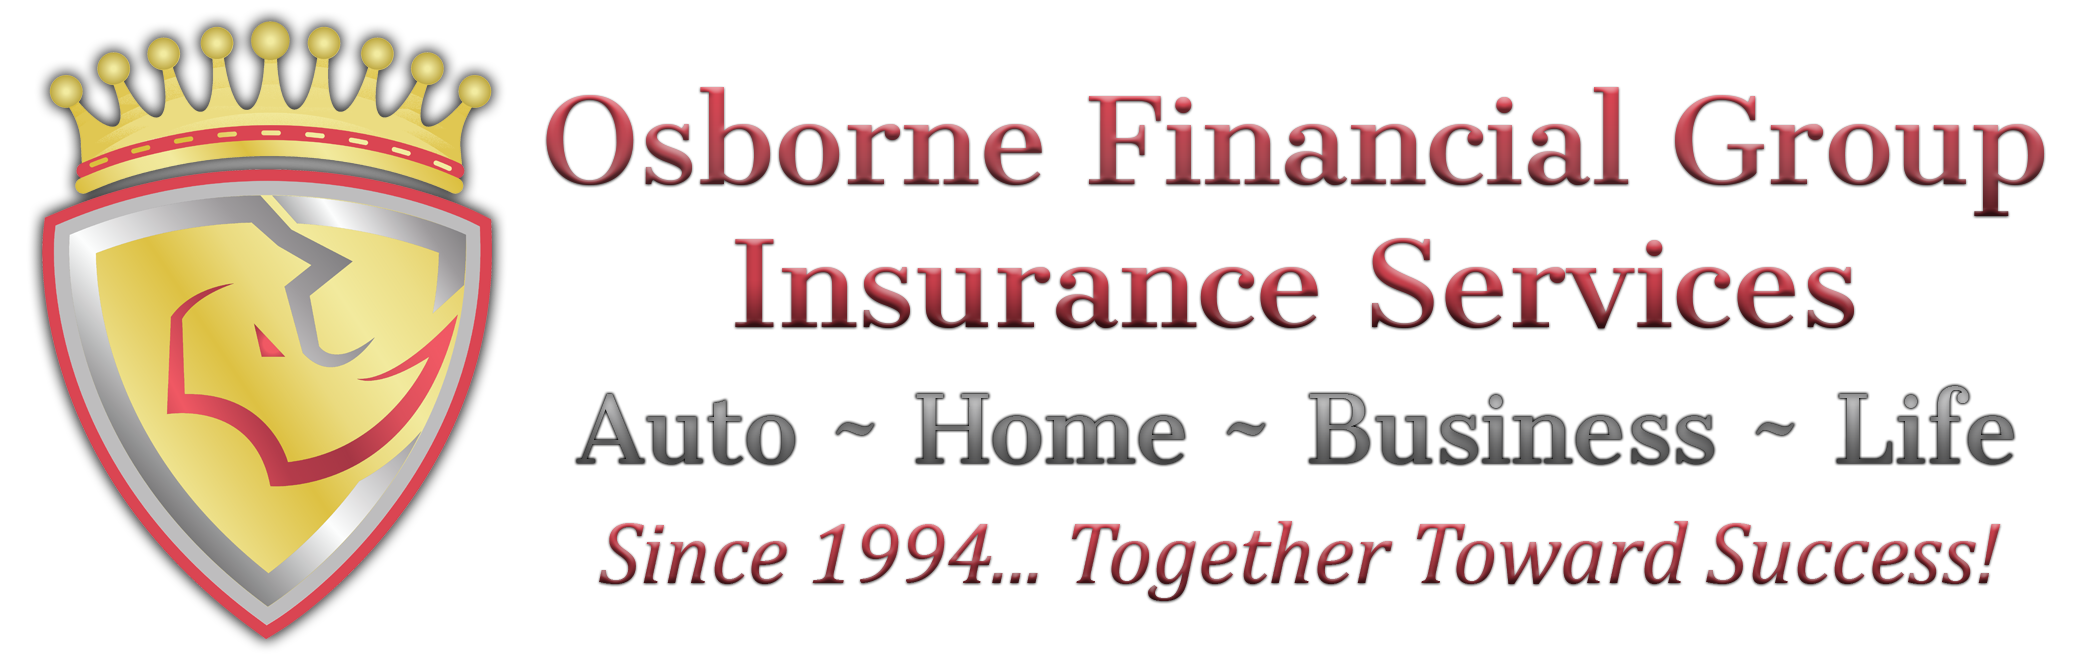 Osborne Financial Group Insurance Services